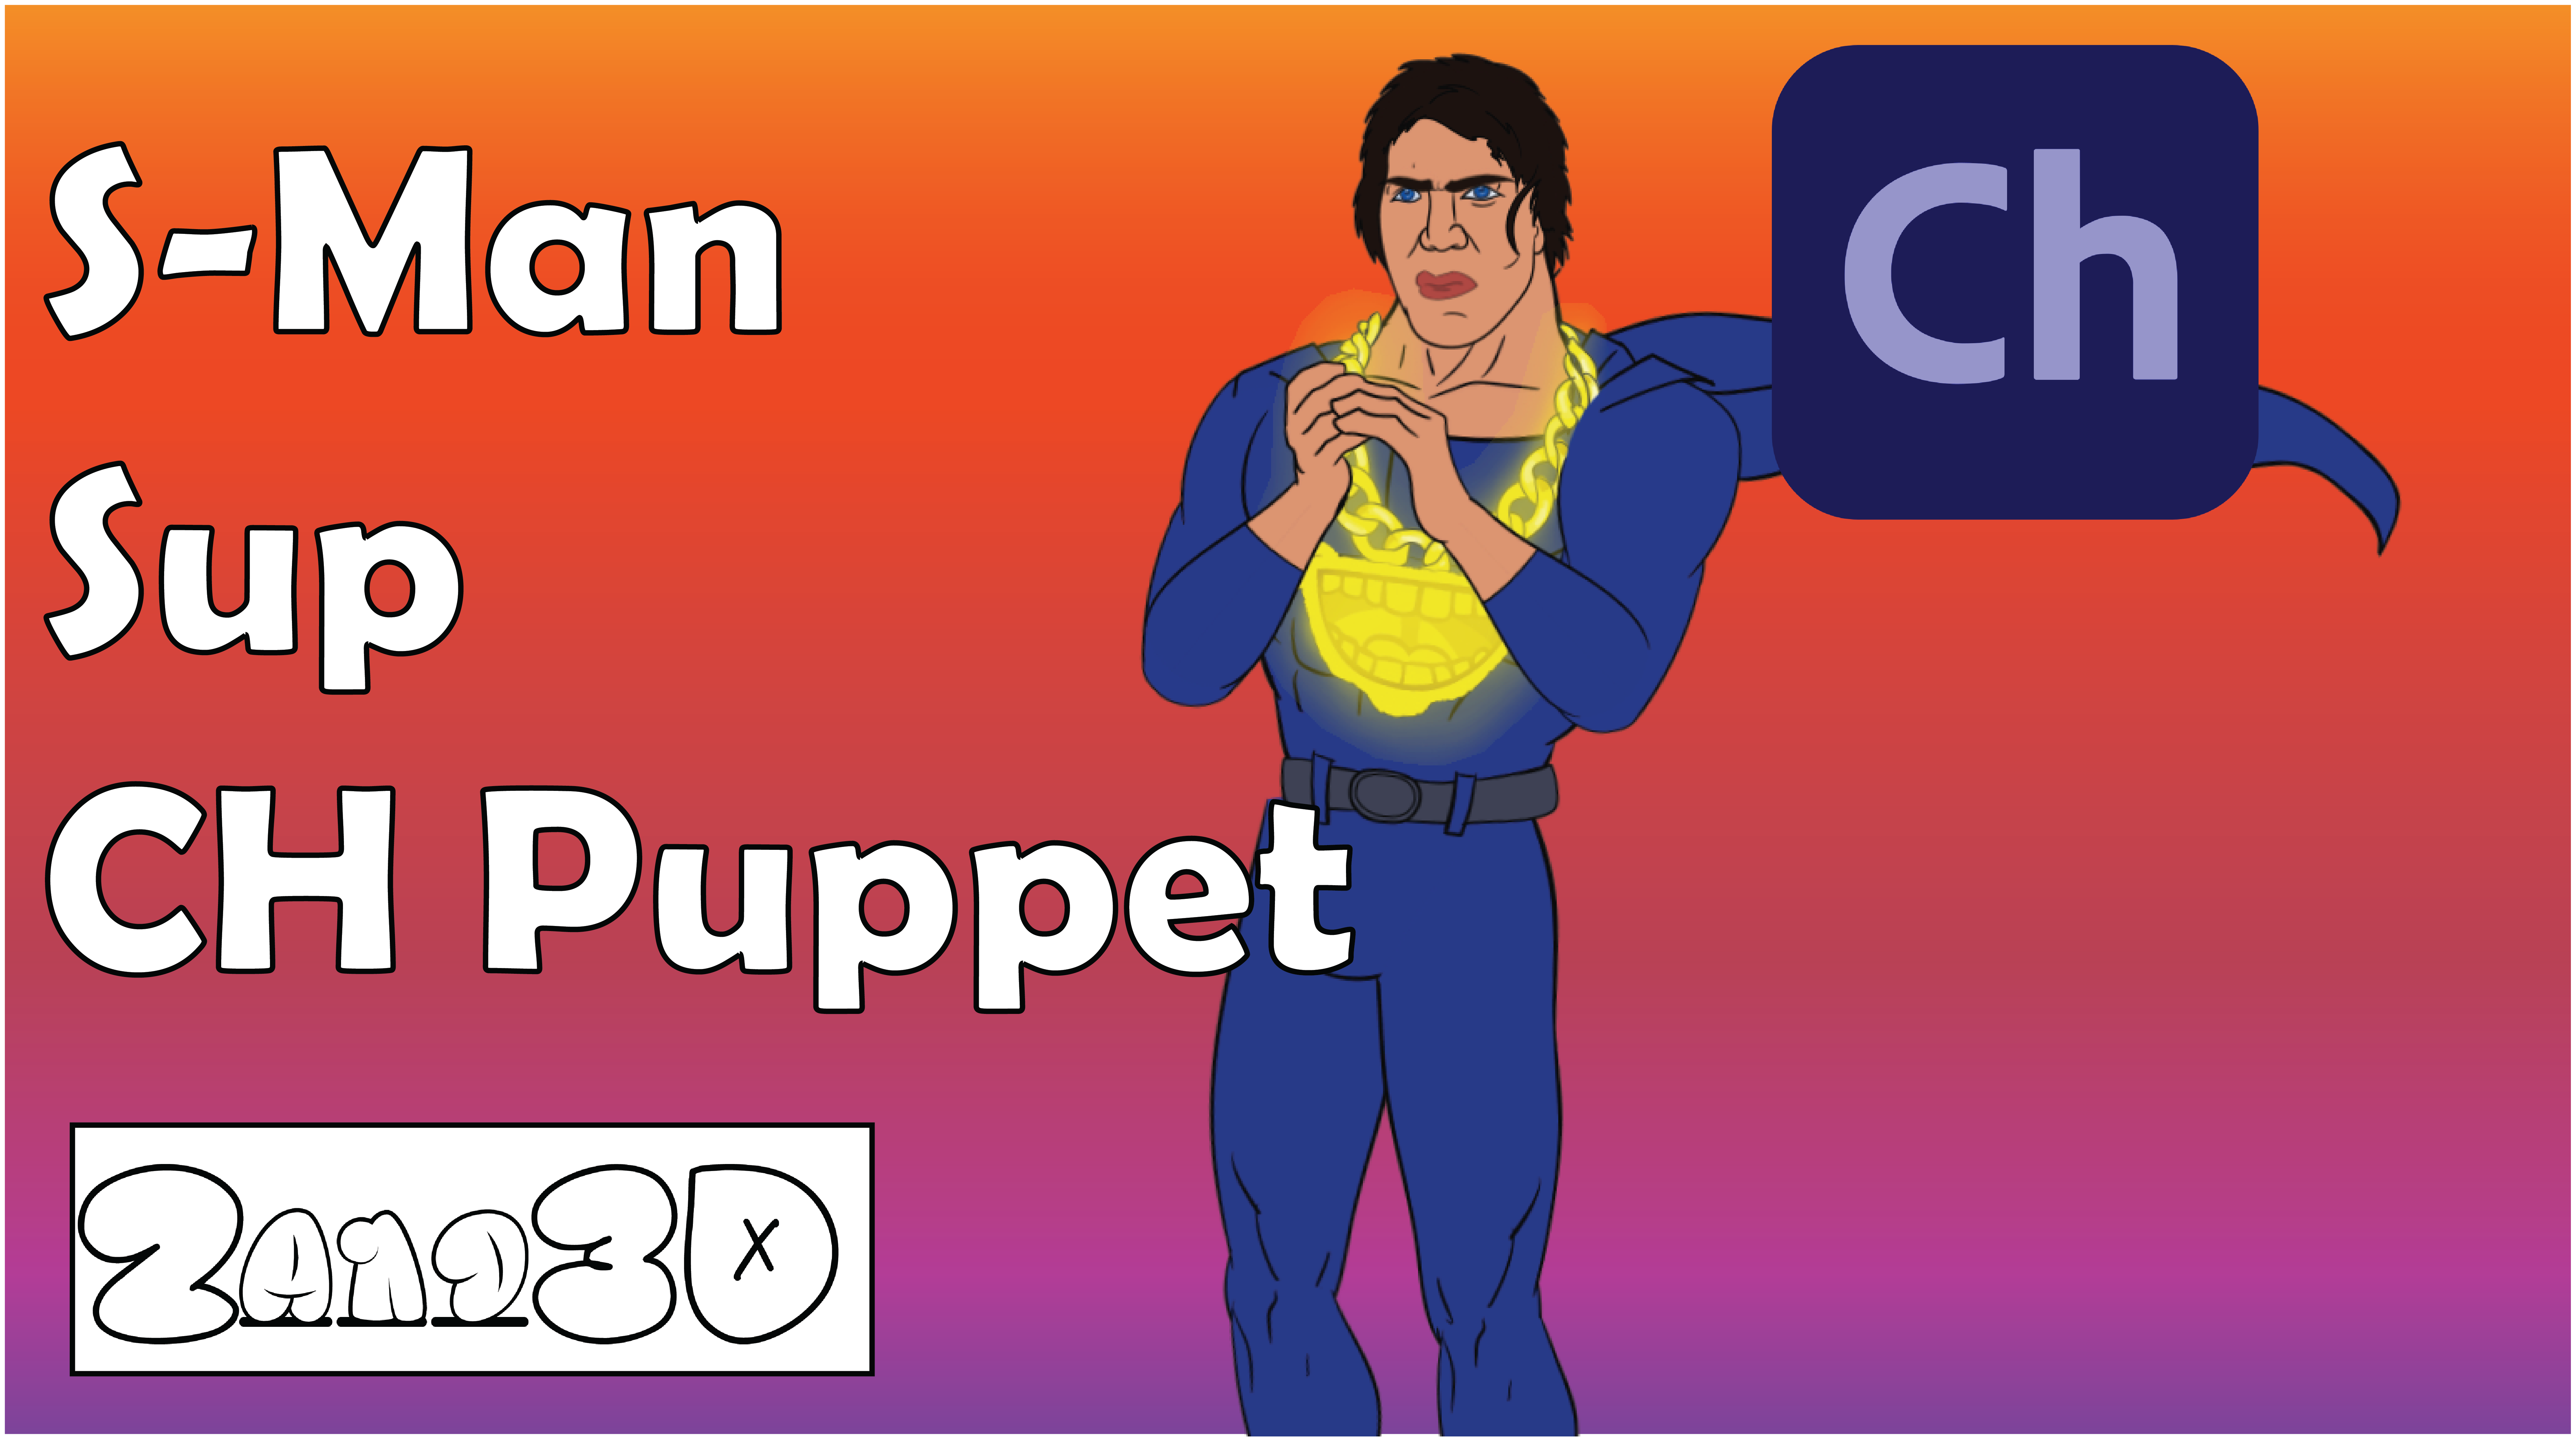 S-Man Adobe CH Puppet (Adobe Character Animator Puppet) Adobe Character Animator Puppet Adobe Ch Puppet